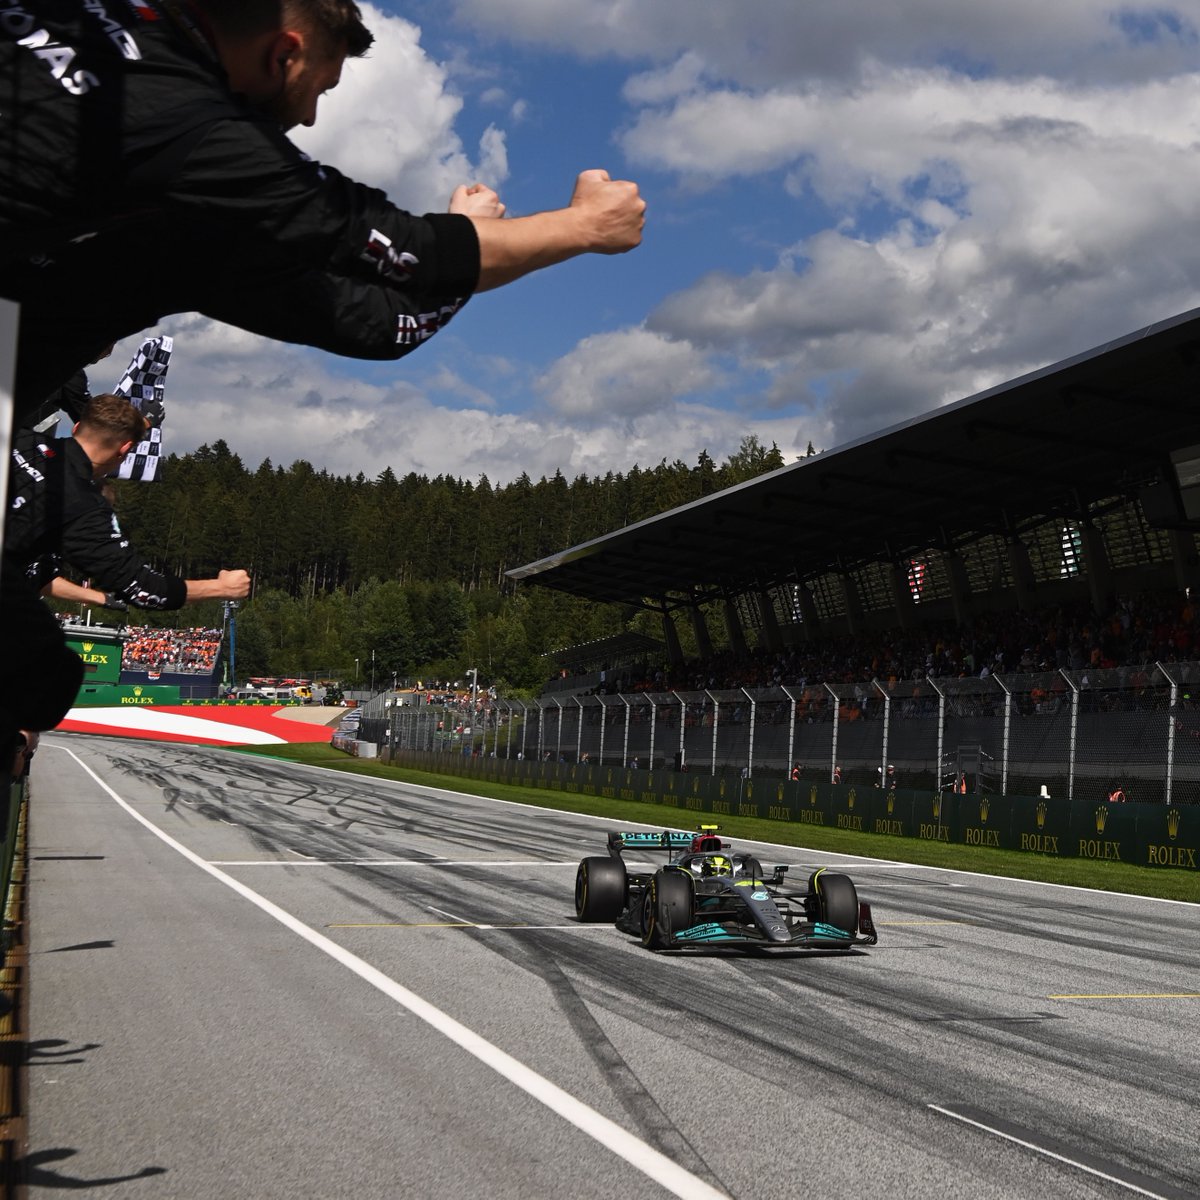 Onto Austria in a week's time 🇦🇹 @MercedesAMGF1

#OutRaceYourself #PETRONASMotorsports #MercedesAMGF1